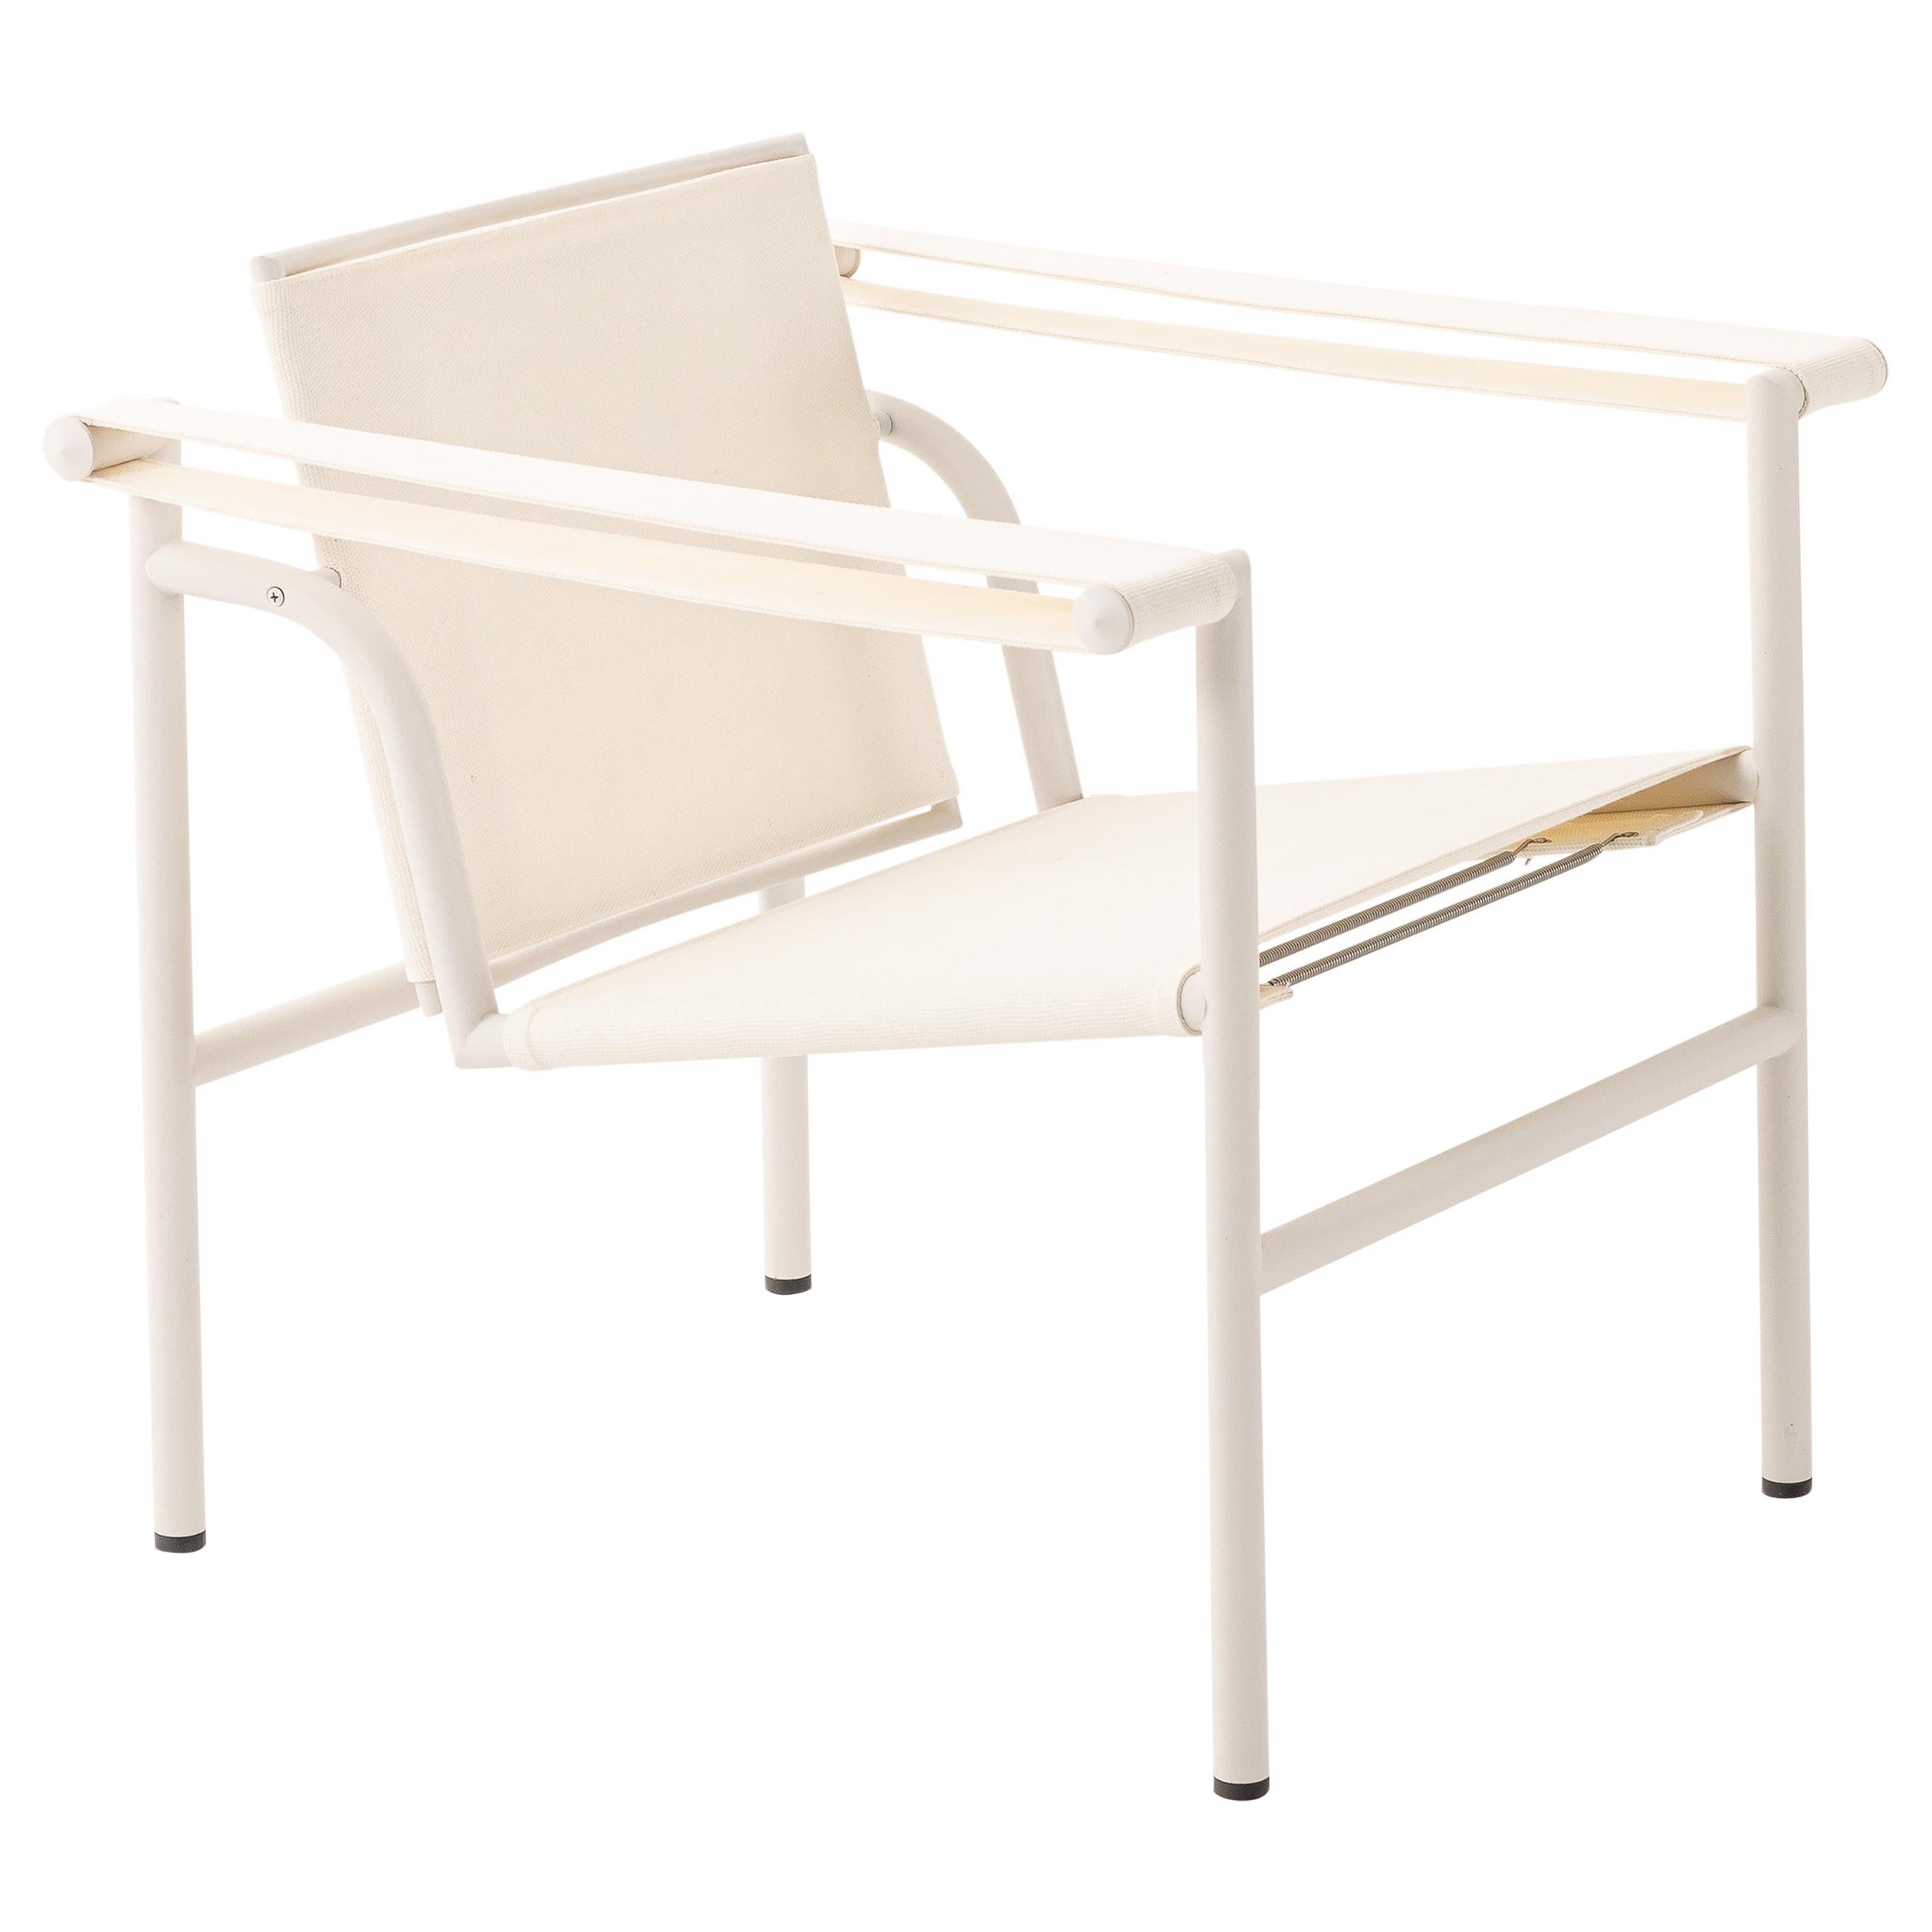 Le Corbusier, Pierre Jeanneret, Charlotte Perriand, Weißer LC1 Stuhl von Cassina